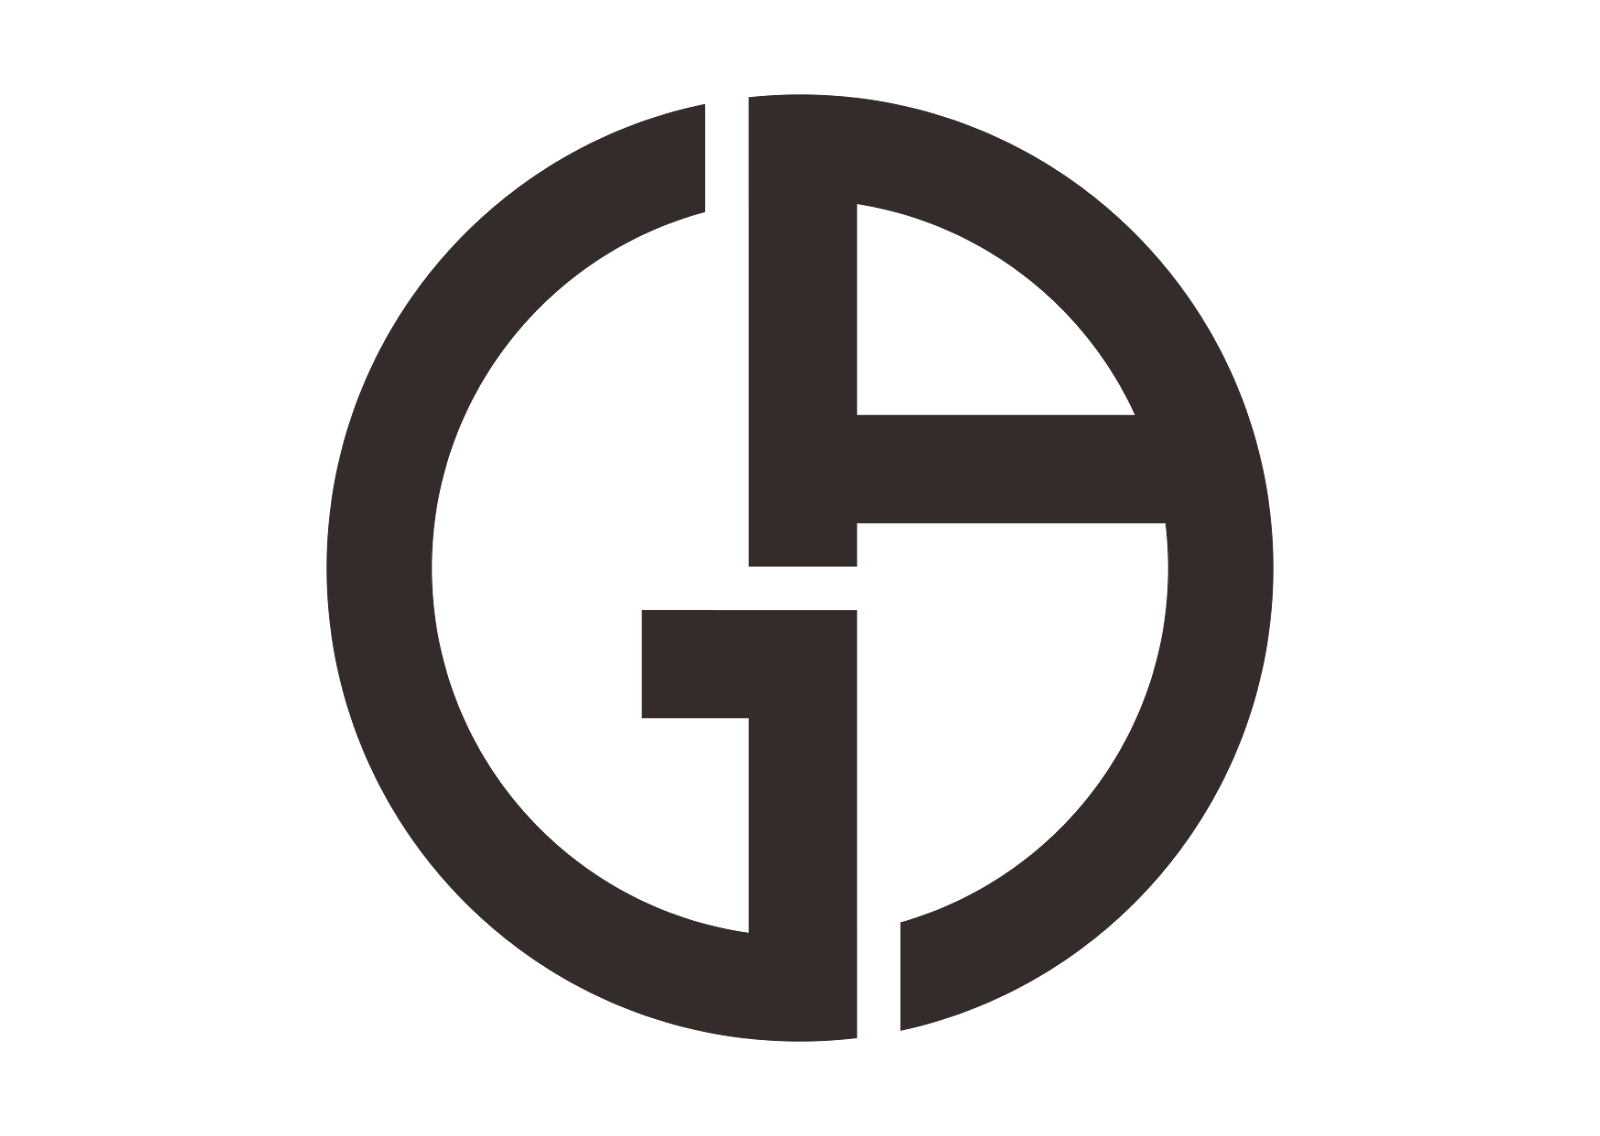 Giorgio-Armani-vector-logo